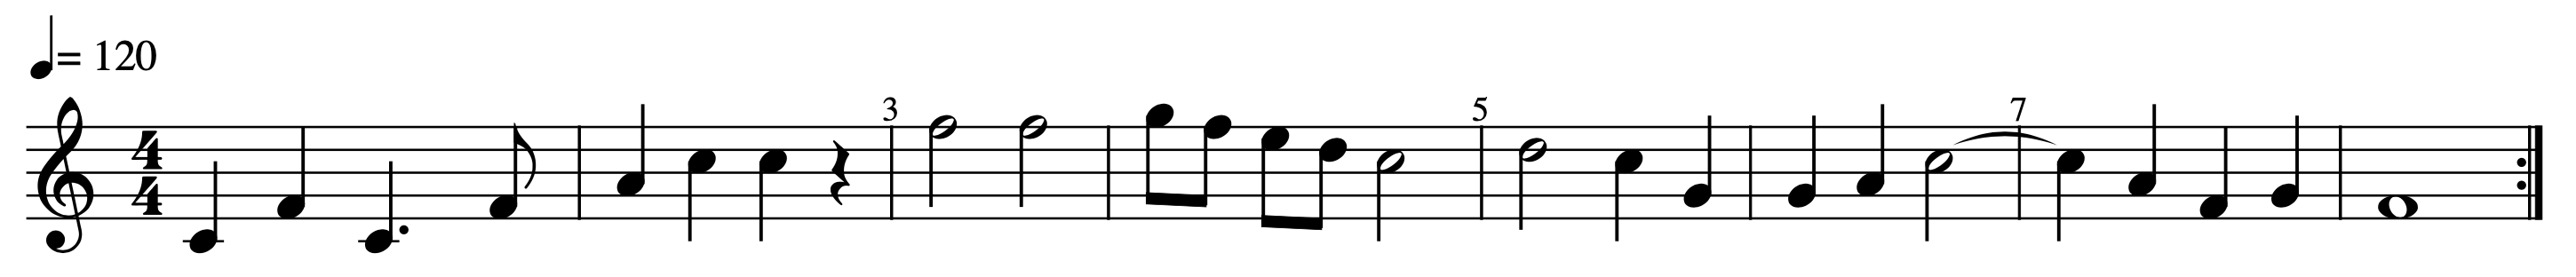 Simple Song Print Score